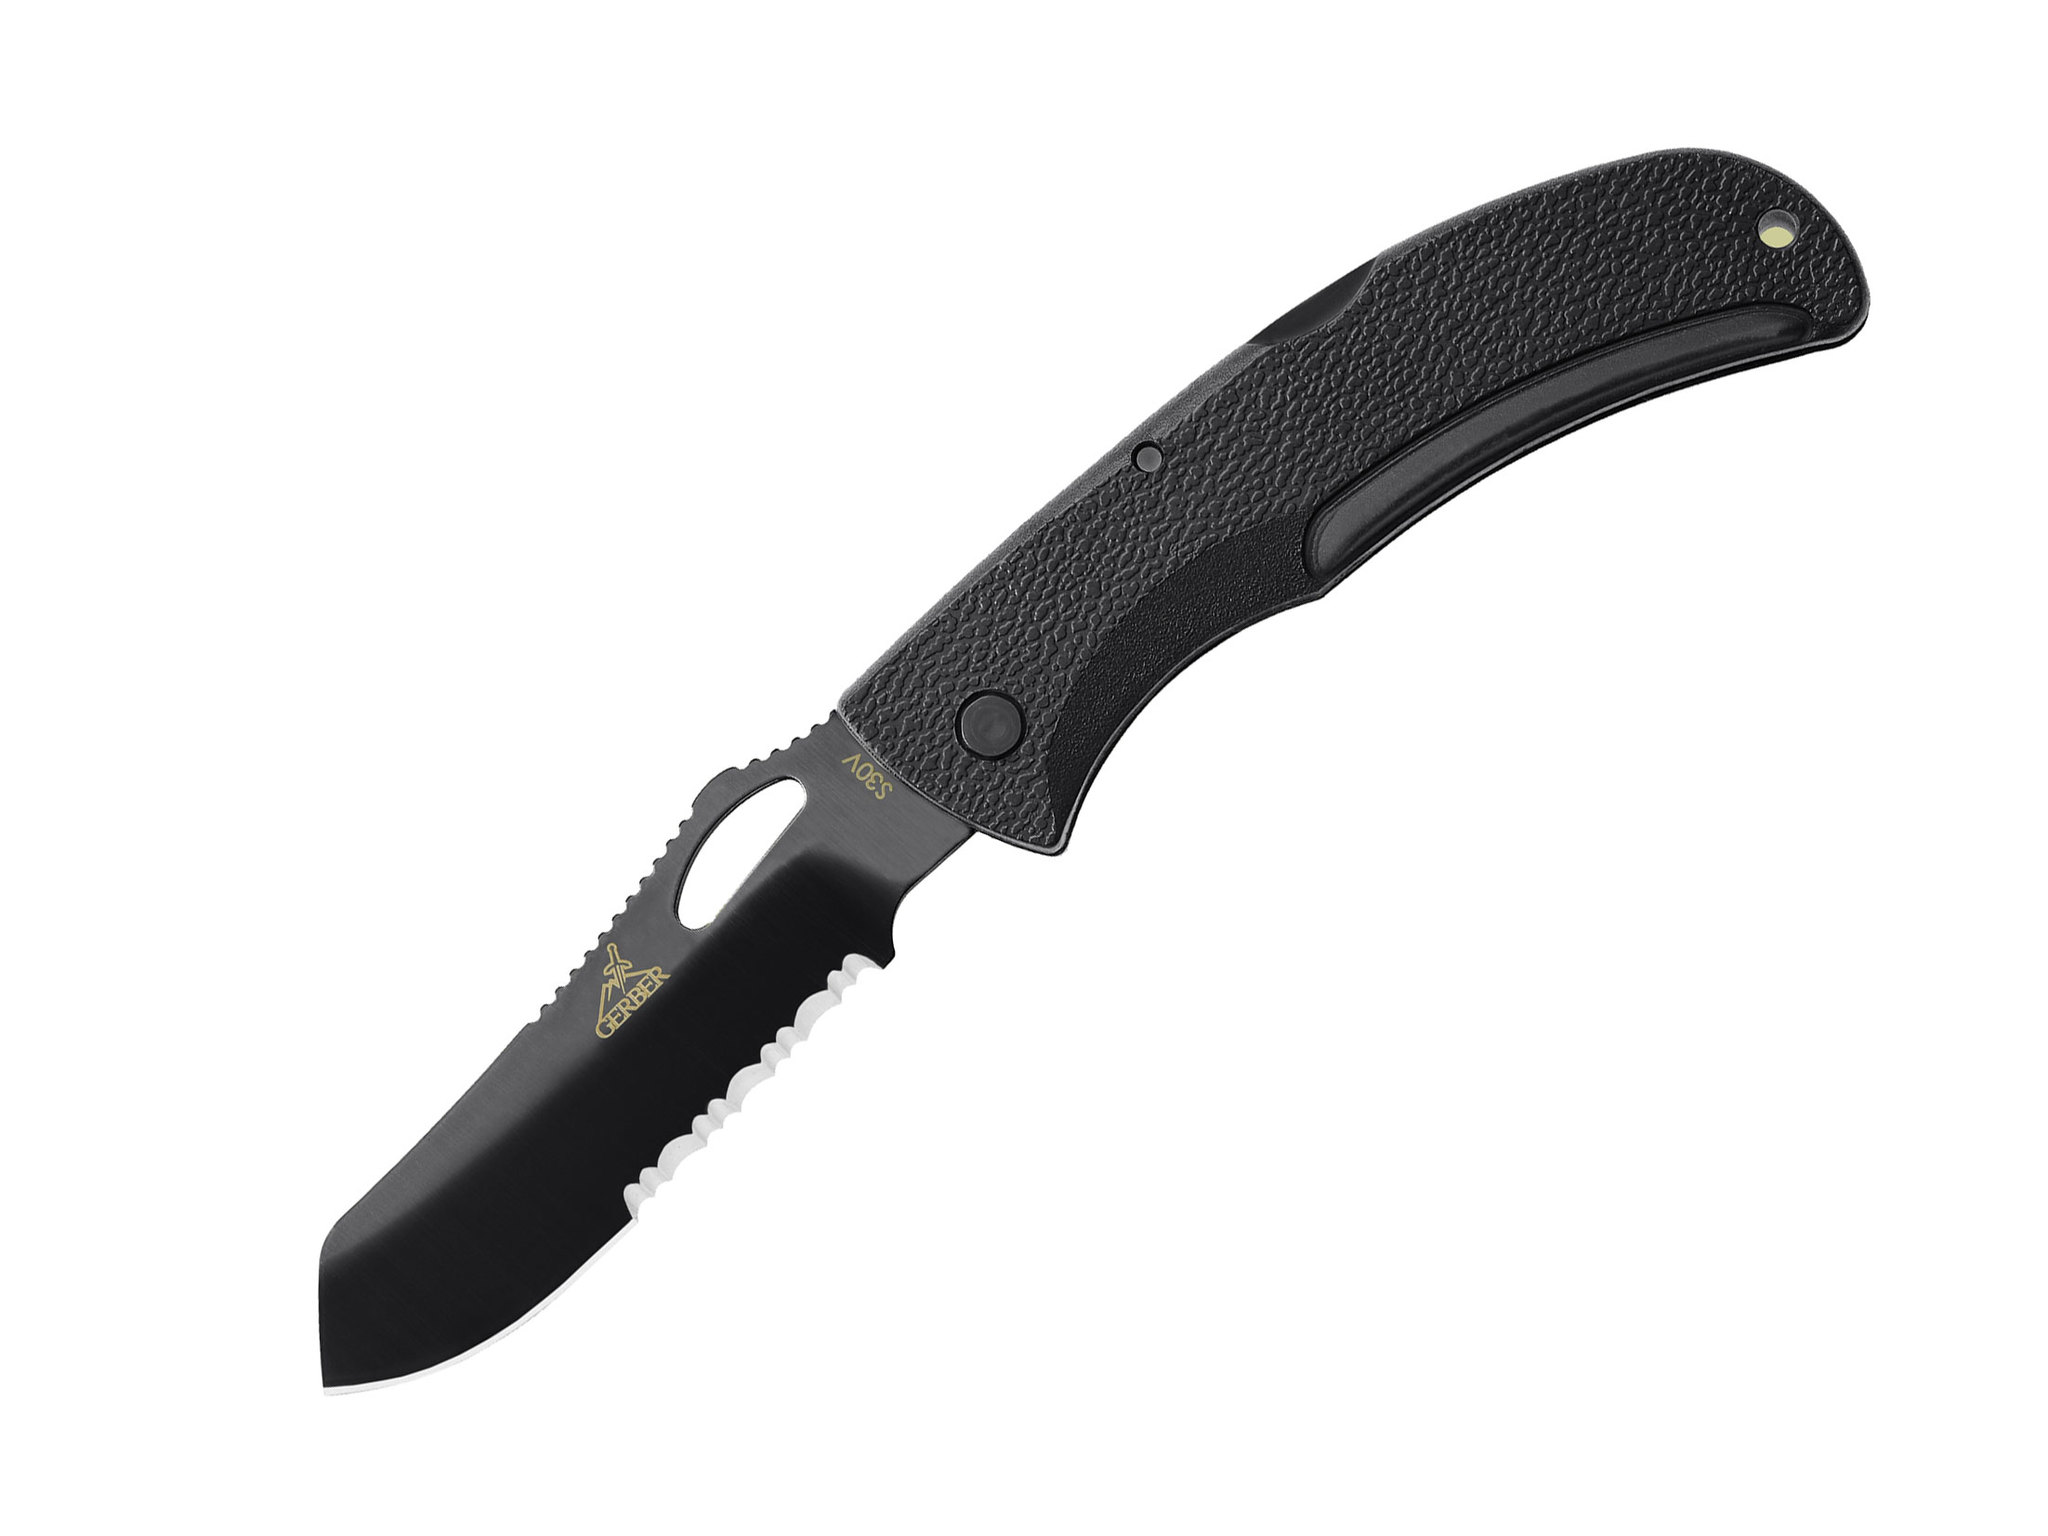 Складной нож Gerber E-Z Out Black, сталь CPM-S30V, рукоять термопластик GRN нож с фиксированным клинком gerber prodogy tanto сталь 420hc рукоять термопластик frn